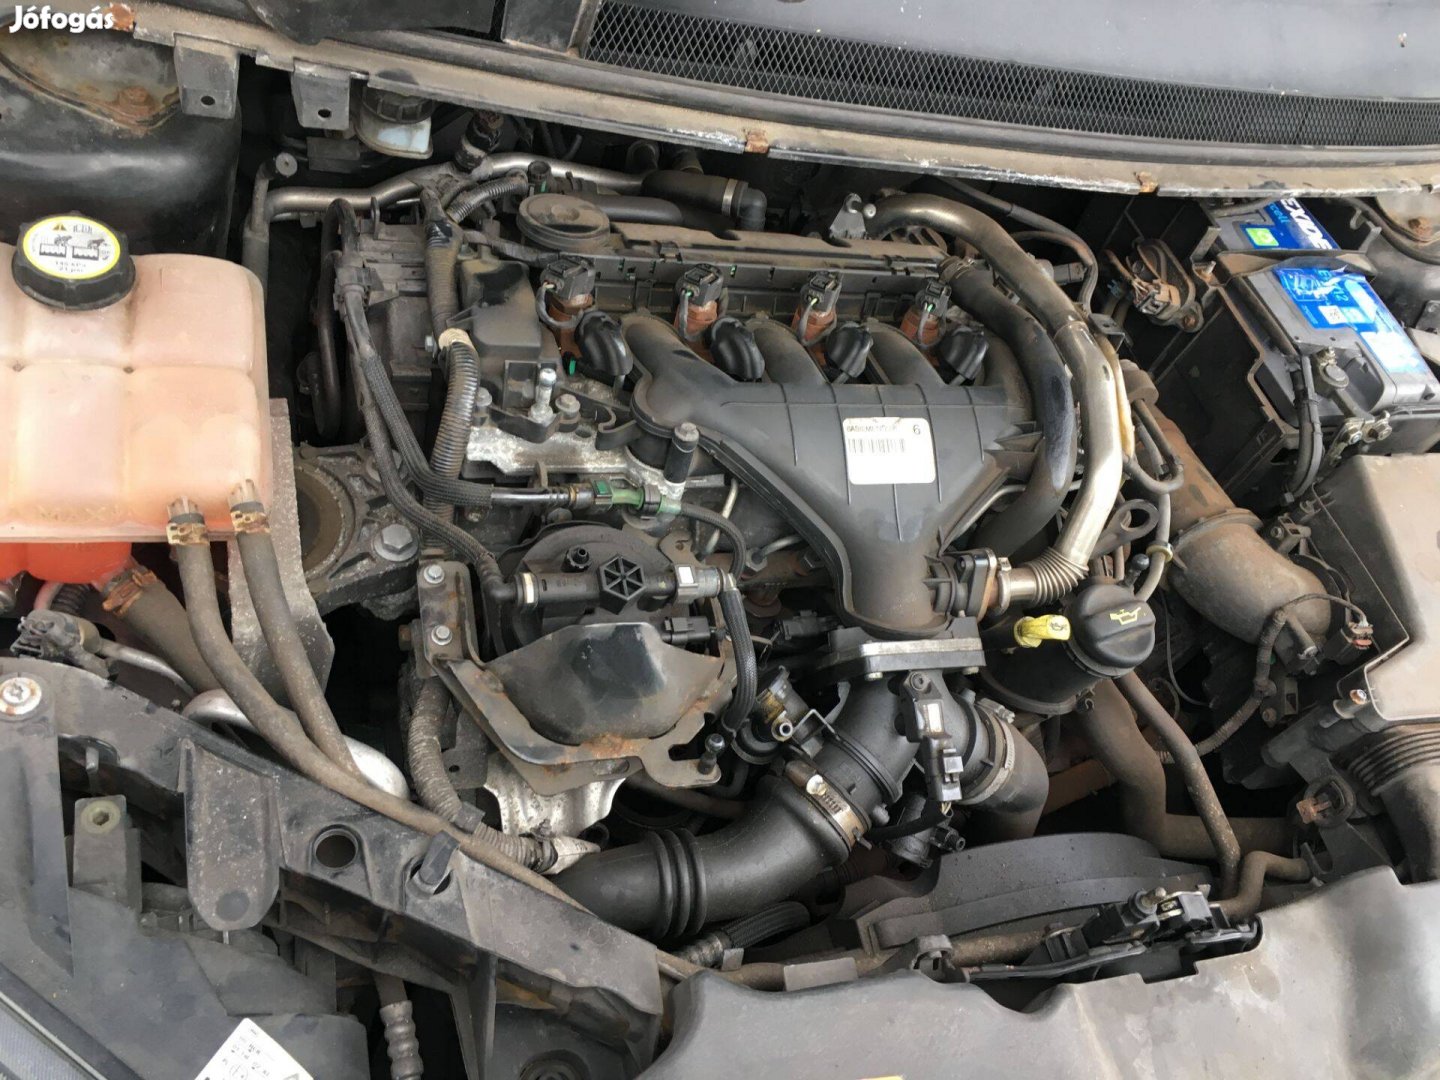 Eladó Volvo C30 V50 S40 S80 V70 2.0 TDCI motor váltó turbó önindító bo